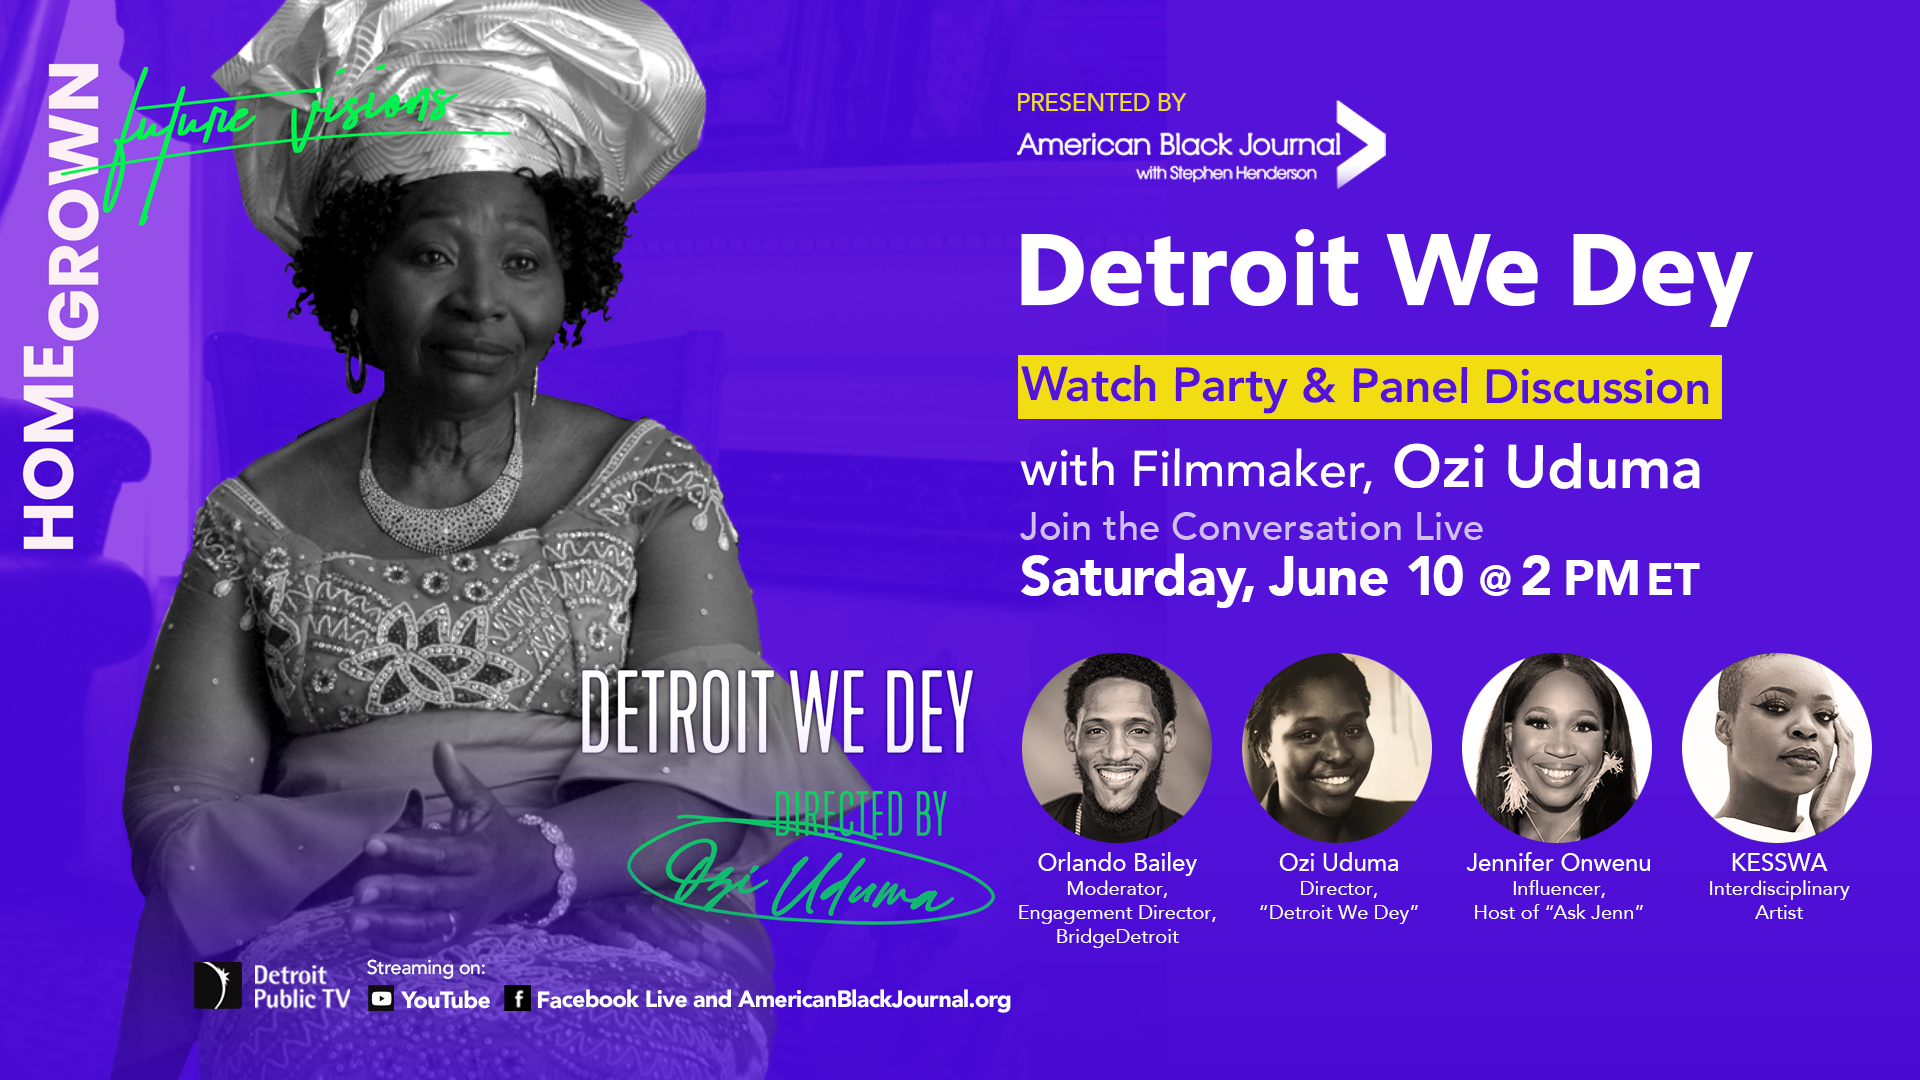 Detroit We Dey film screening and conversation